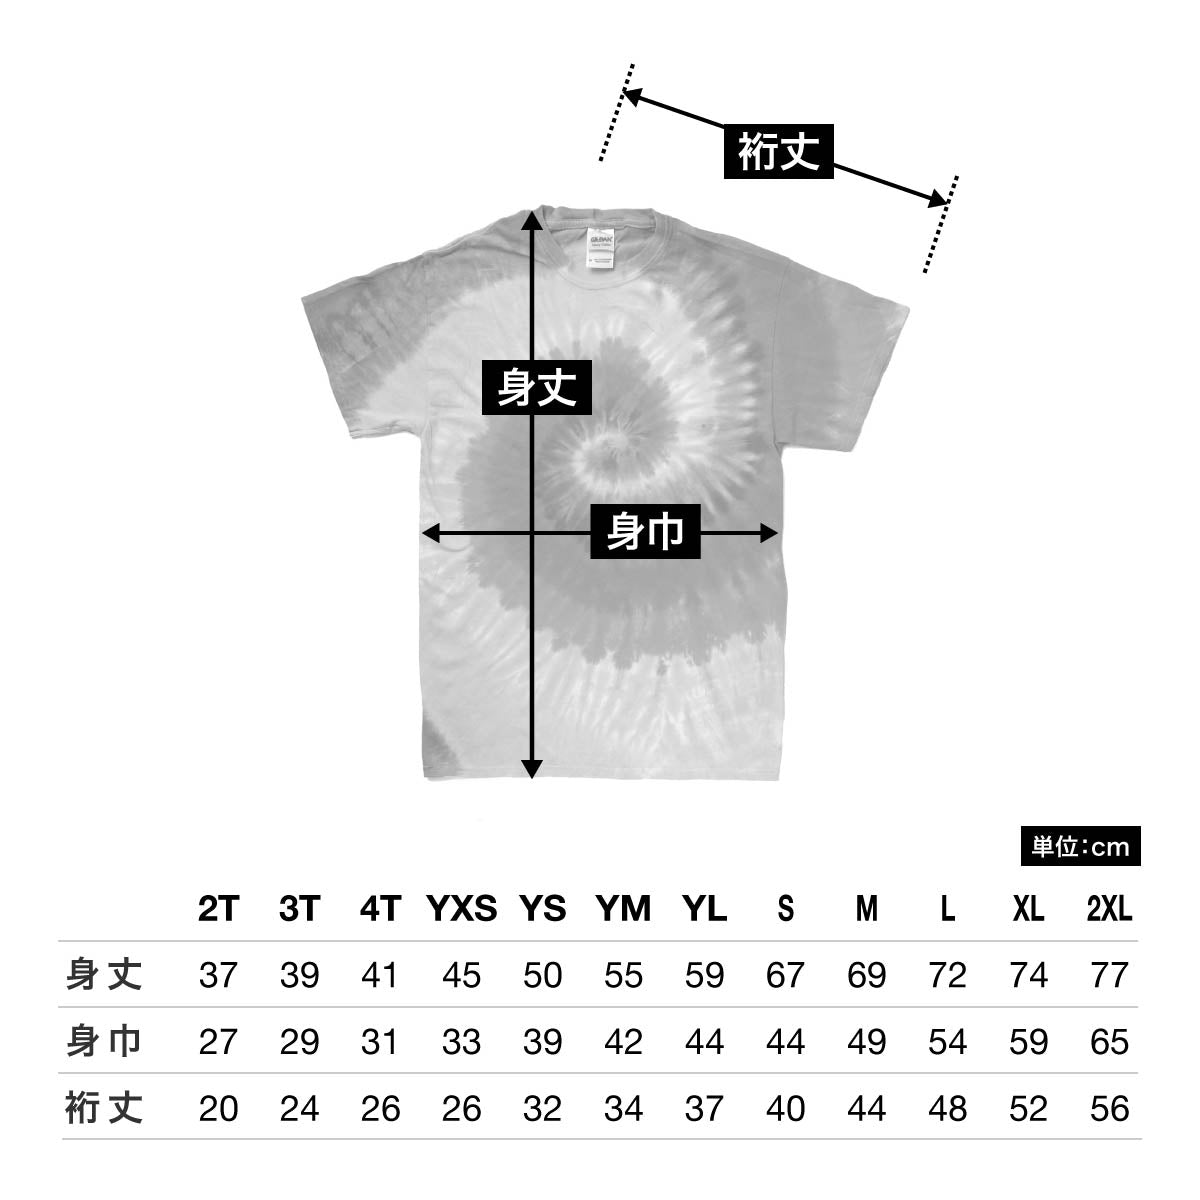 5.3 oz レインボー&マルチカラー Tシャツ | メンズ | 1枚 | TD1000-RM | ネオンレインボー